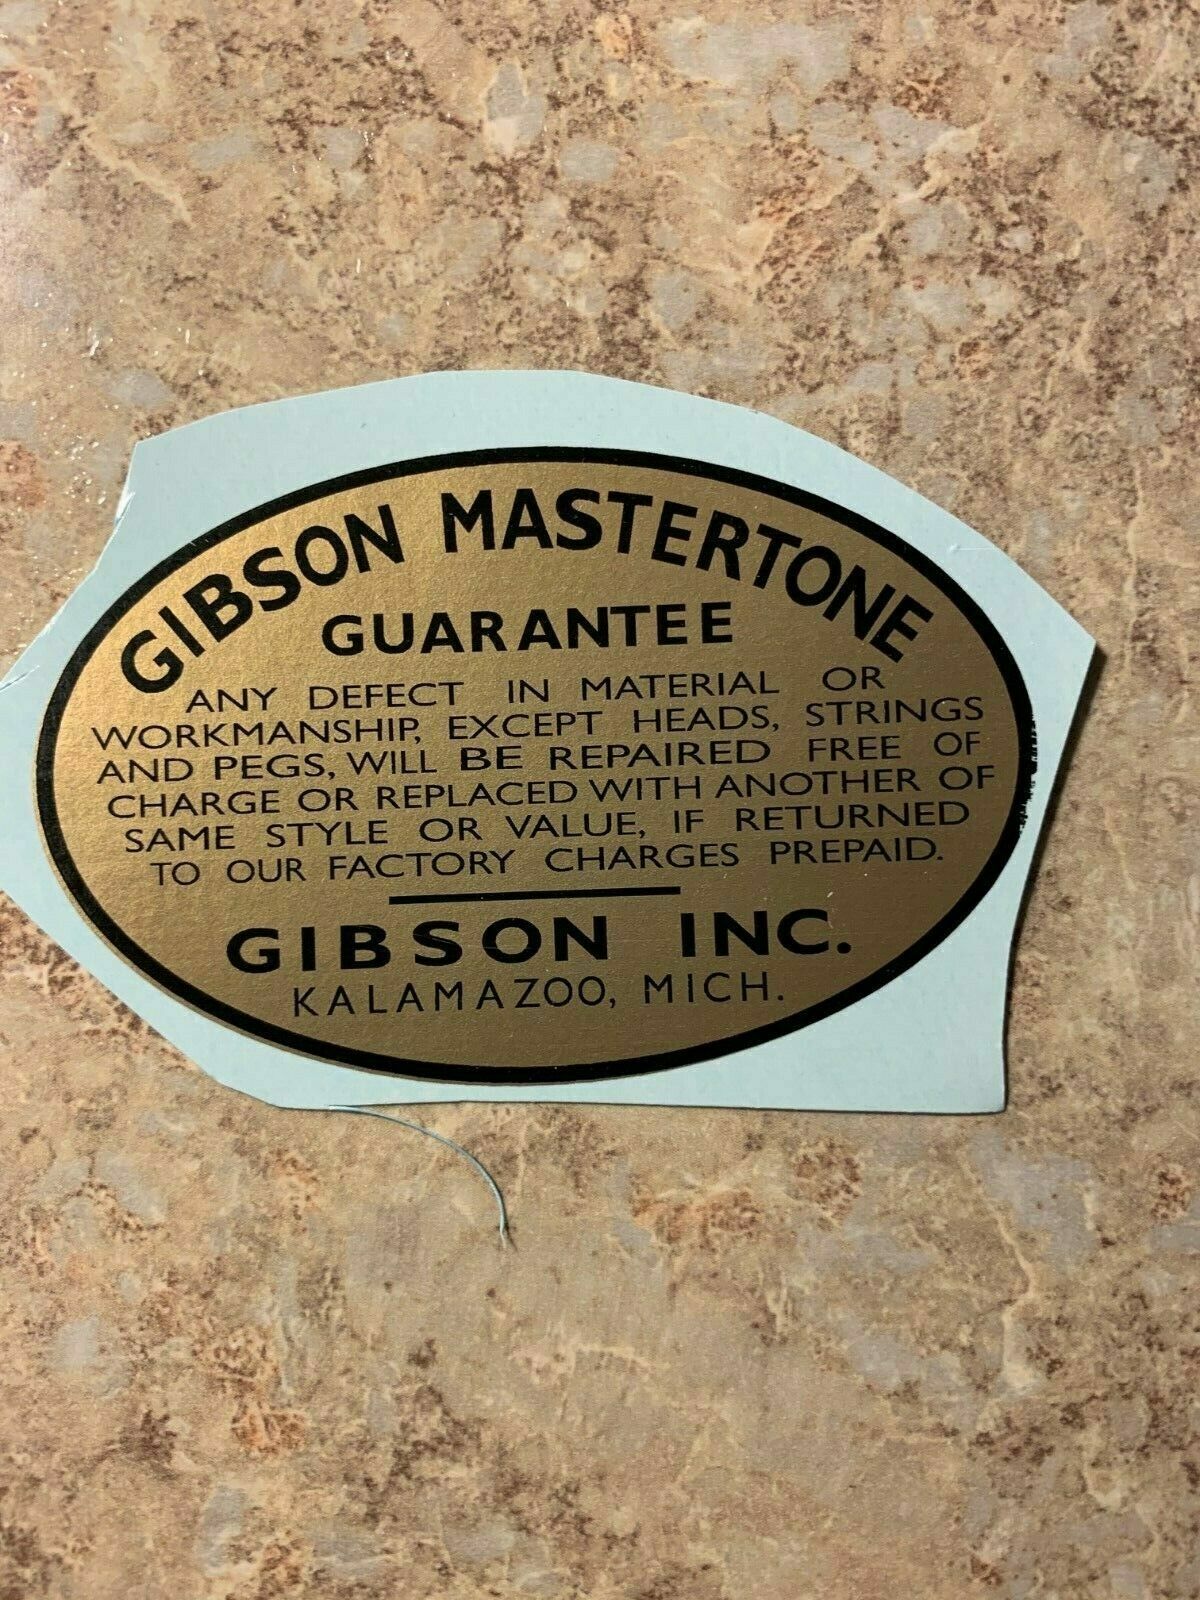 Gibson Mastertone Banjo Label Kalamazoo, Mich